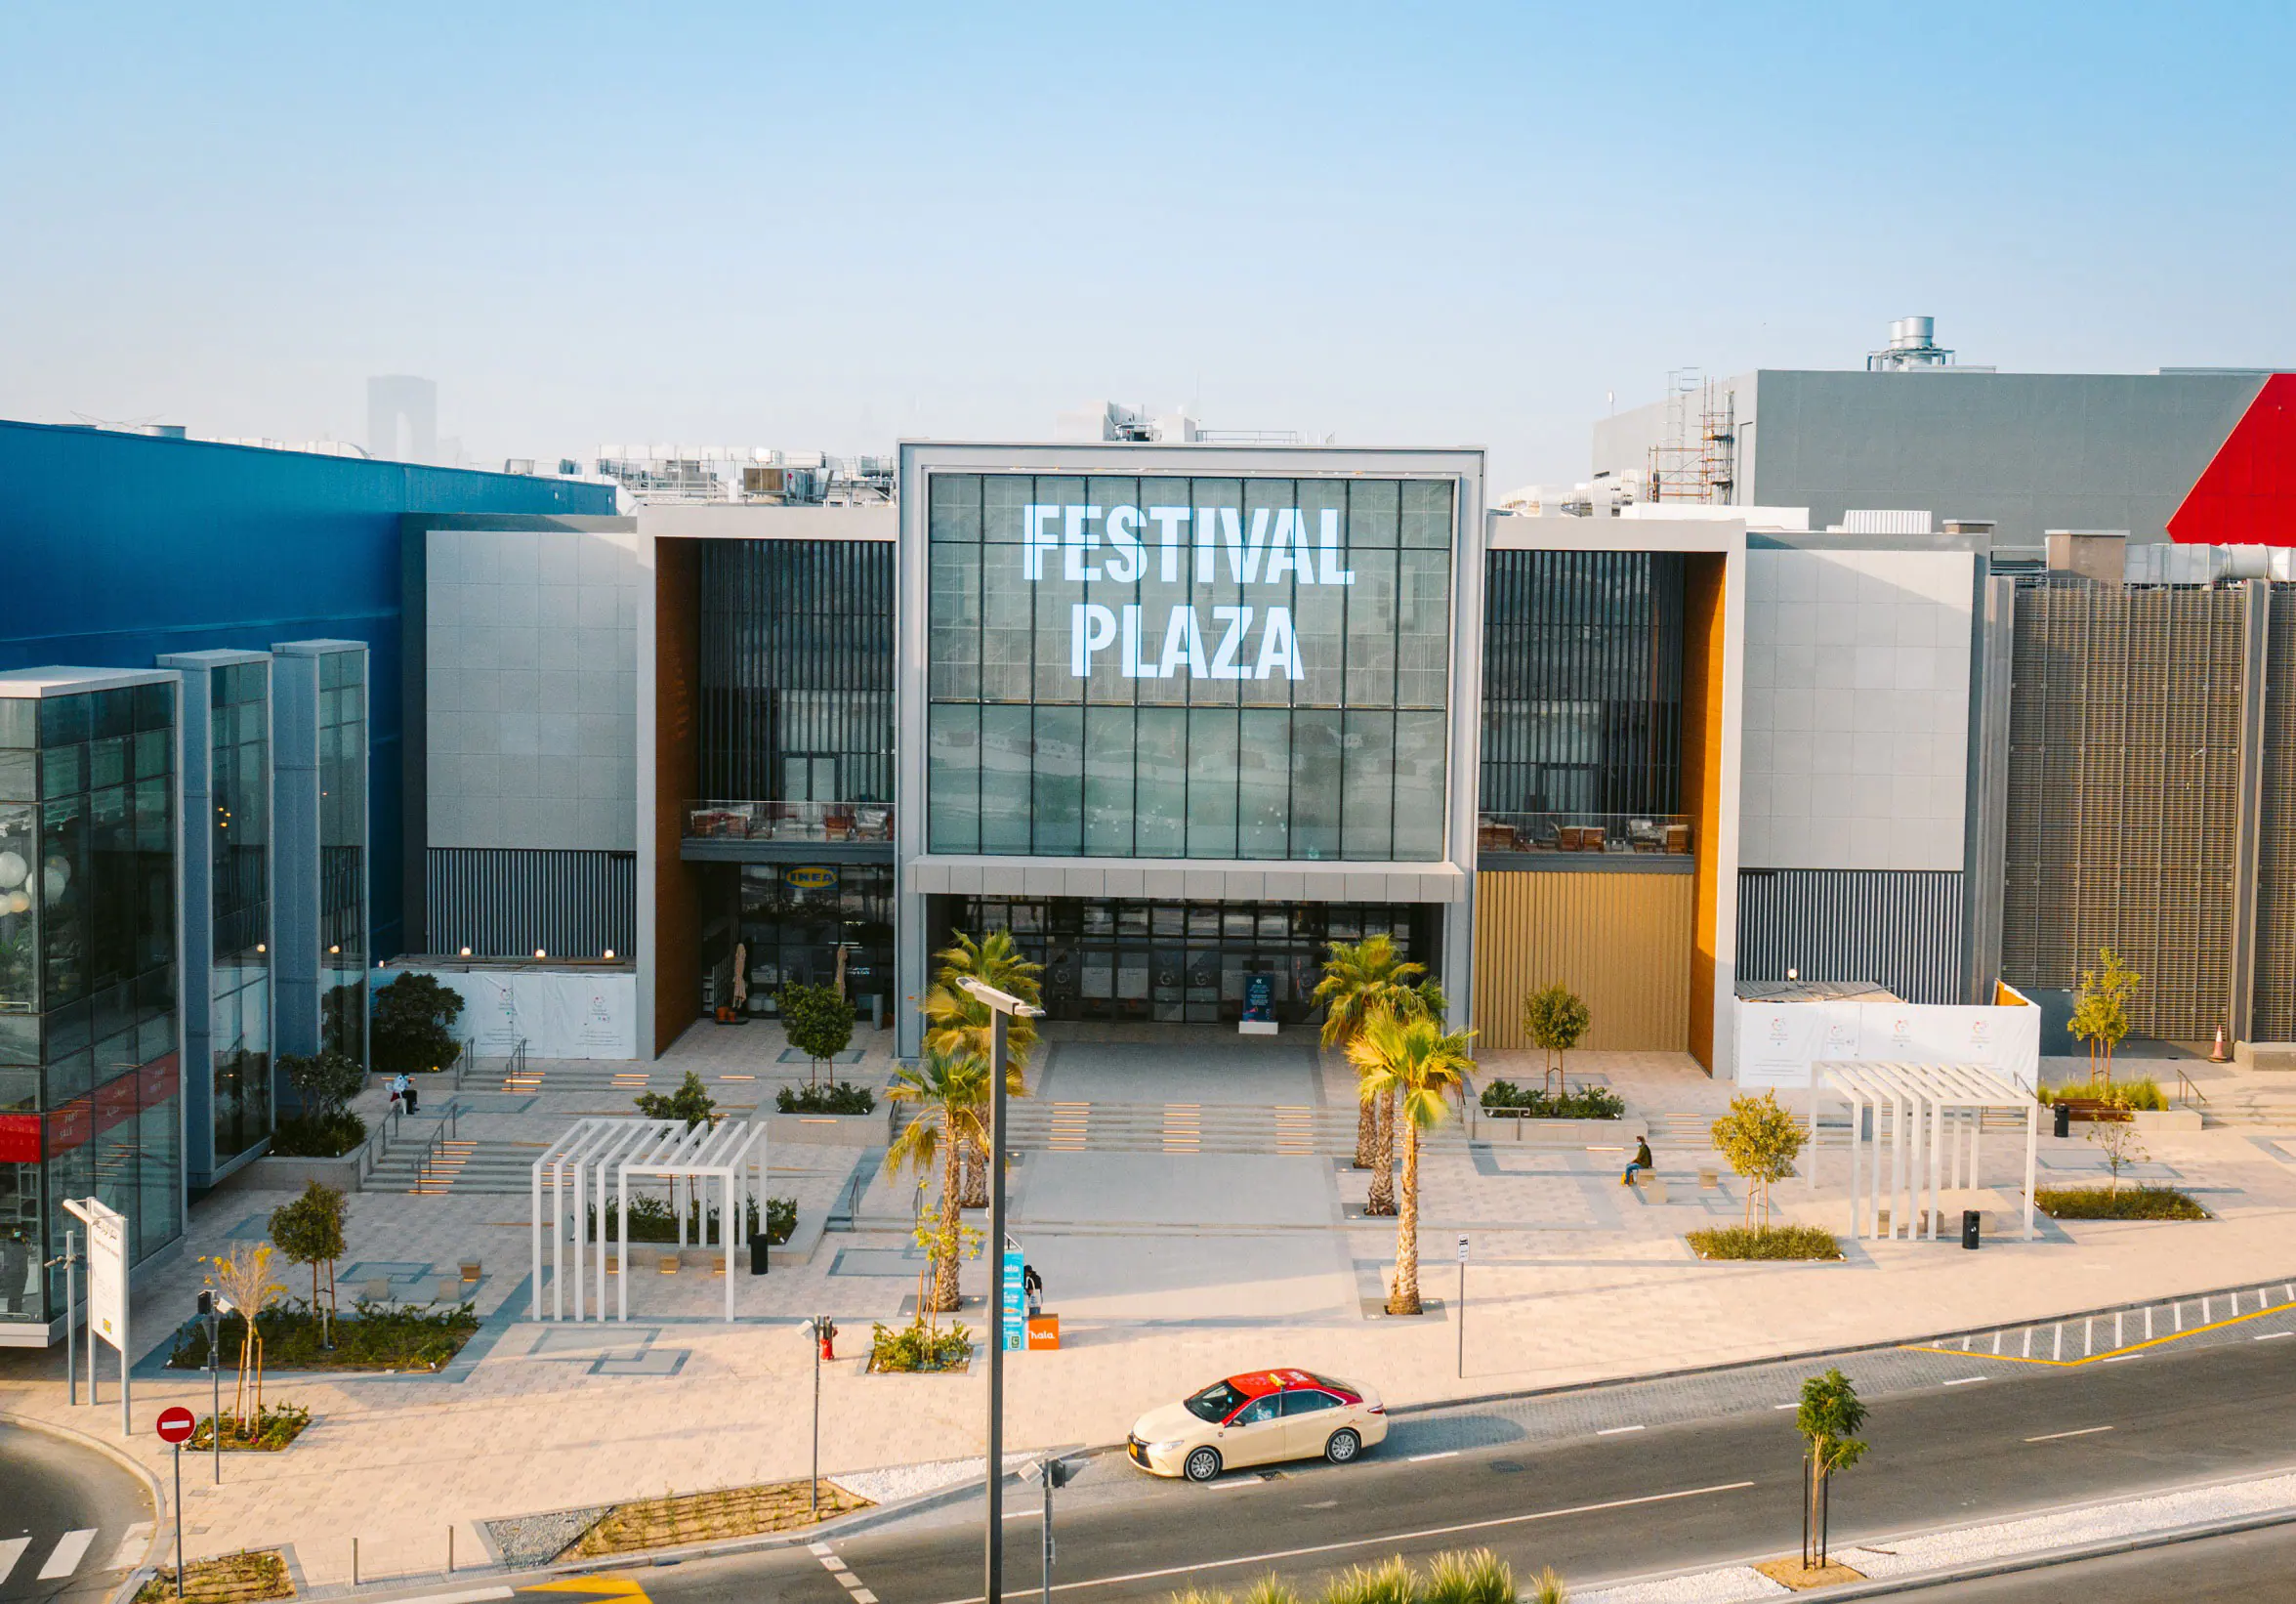 Dubai Festival Plaza